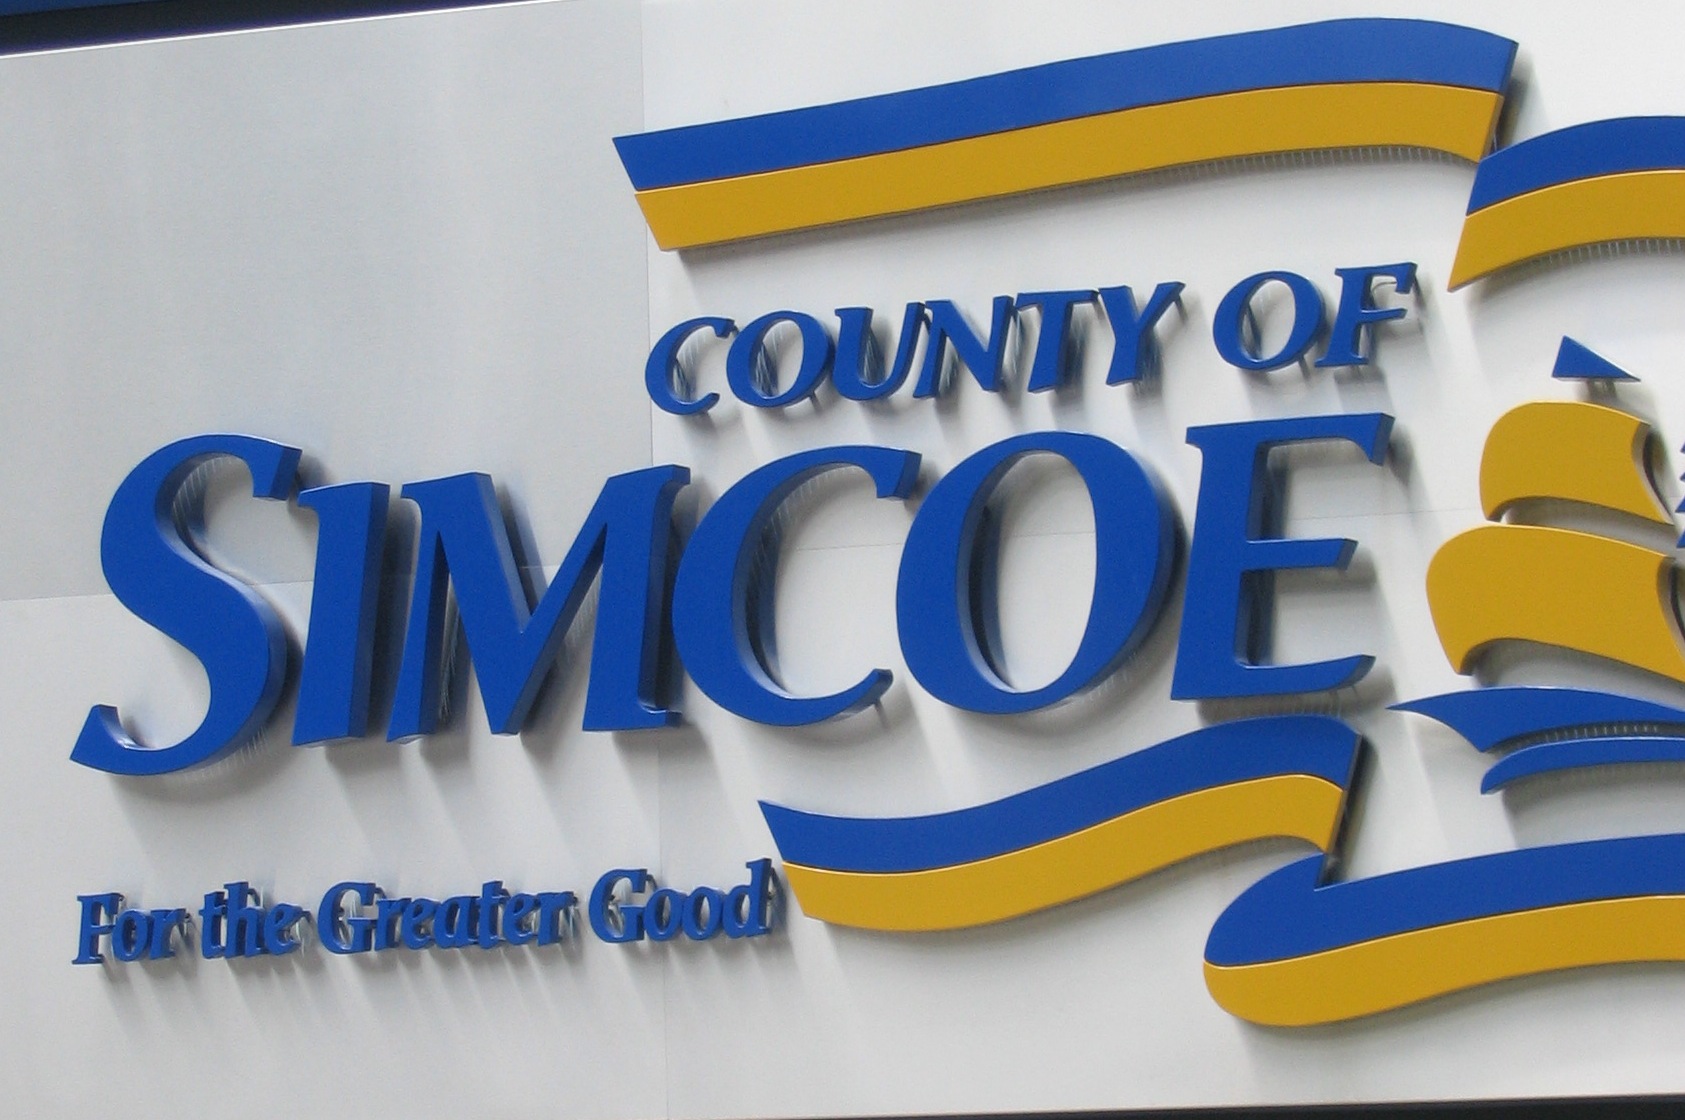 Simcoe County